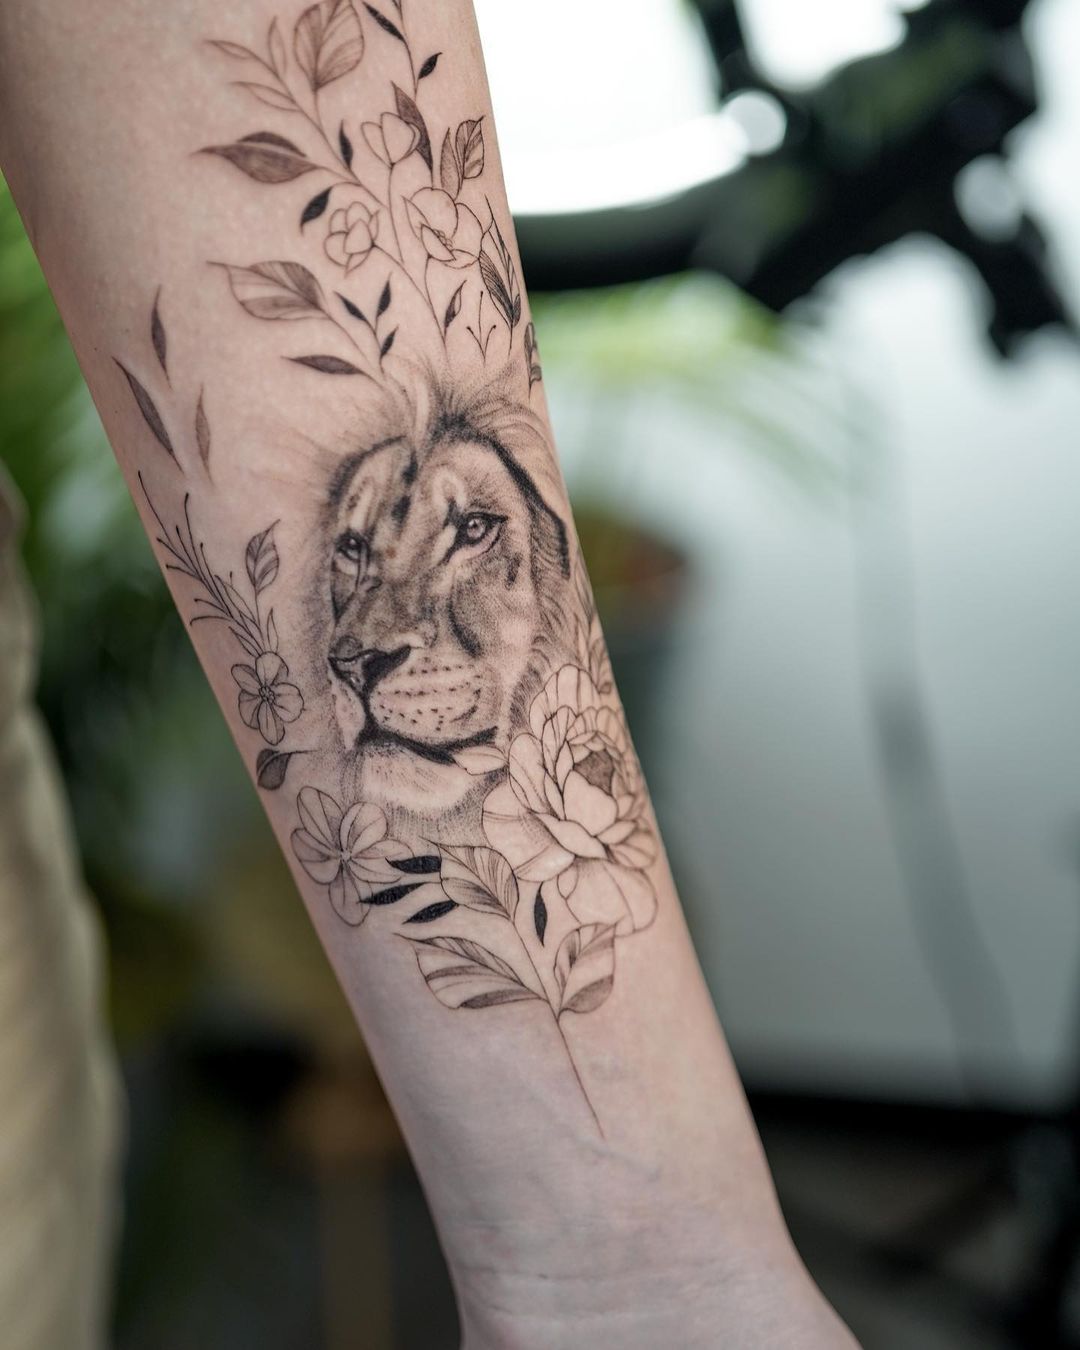 Realistic Lion Rose Flower Temporary Tattoos For Women Adult Girl Compass  Skull Fake Tattoo Arm Thigh Body Art Waterproof Tatoos  Temporary Tattoos   AliExpress